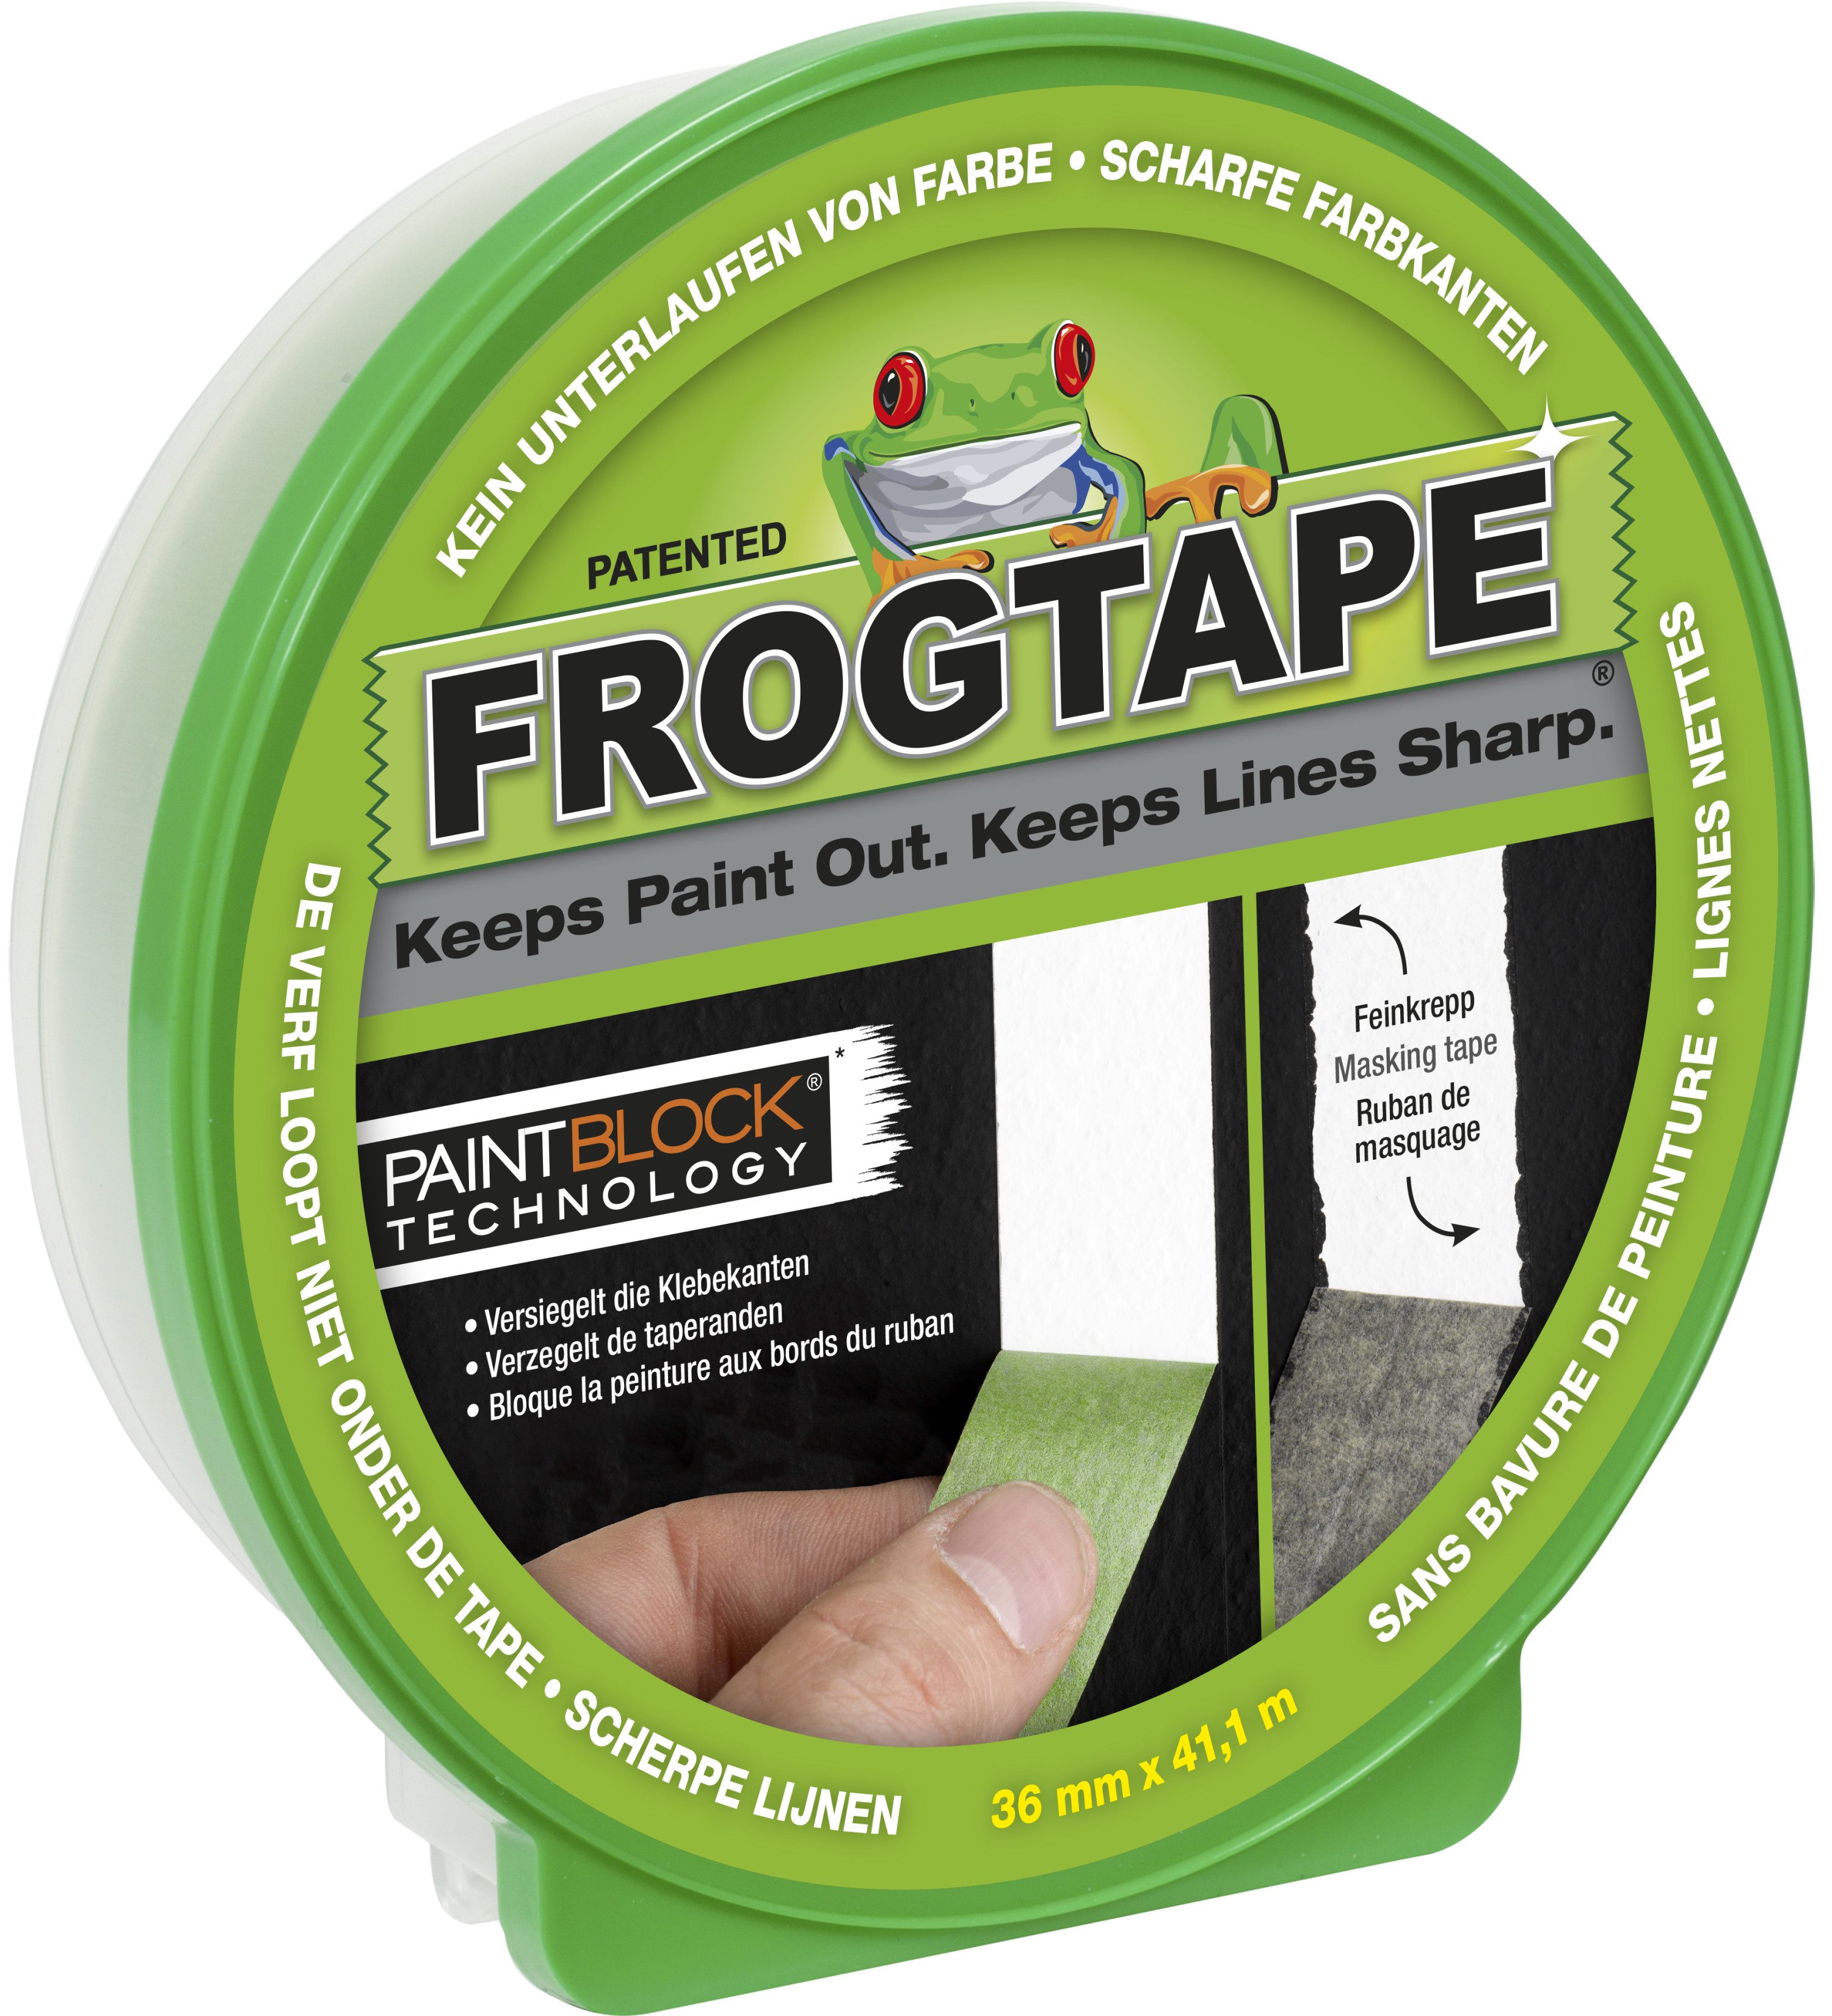 KIP GMBH - BOCHOLT Kreppband Frogtape grün 36mm 41,1m Kreppband mit Paintblocker